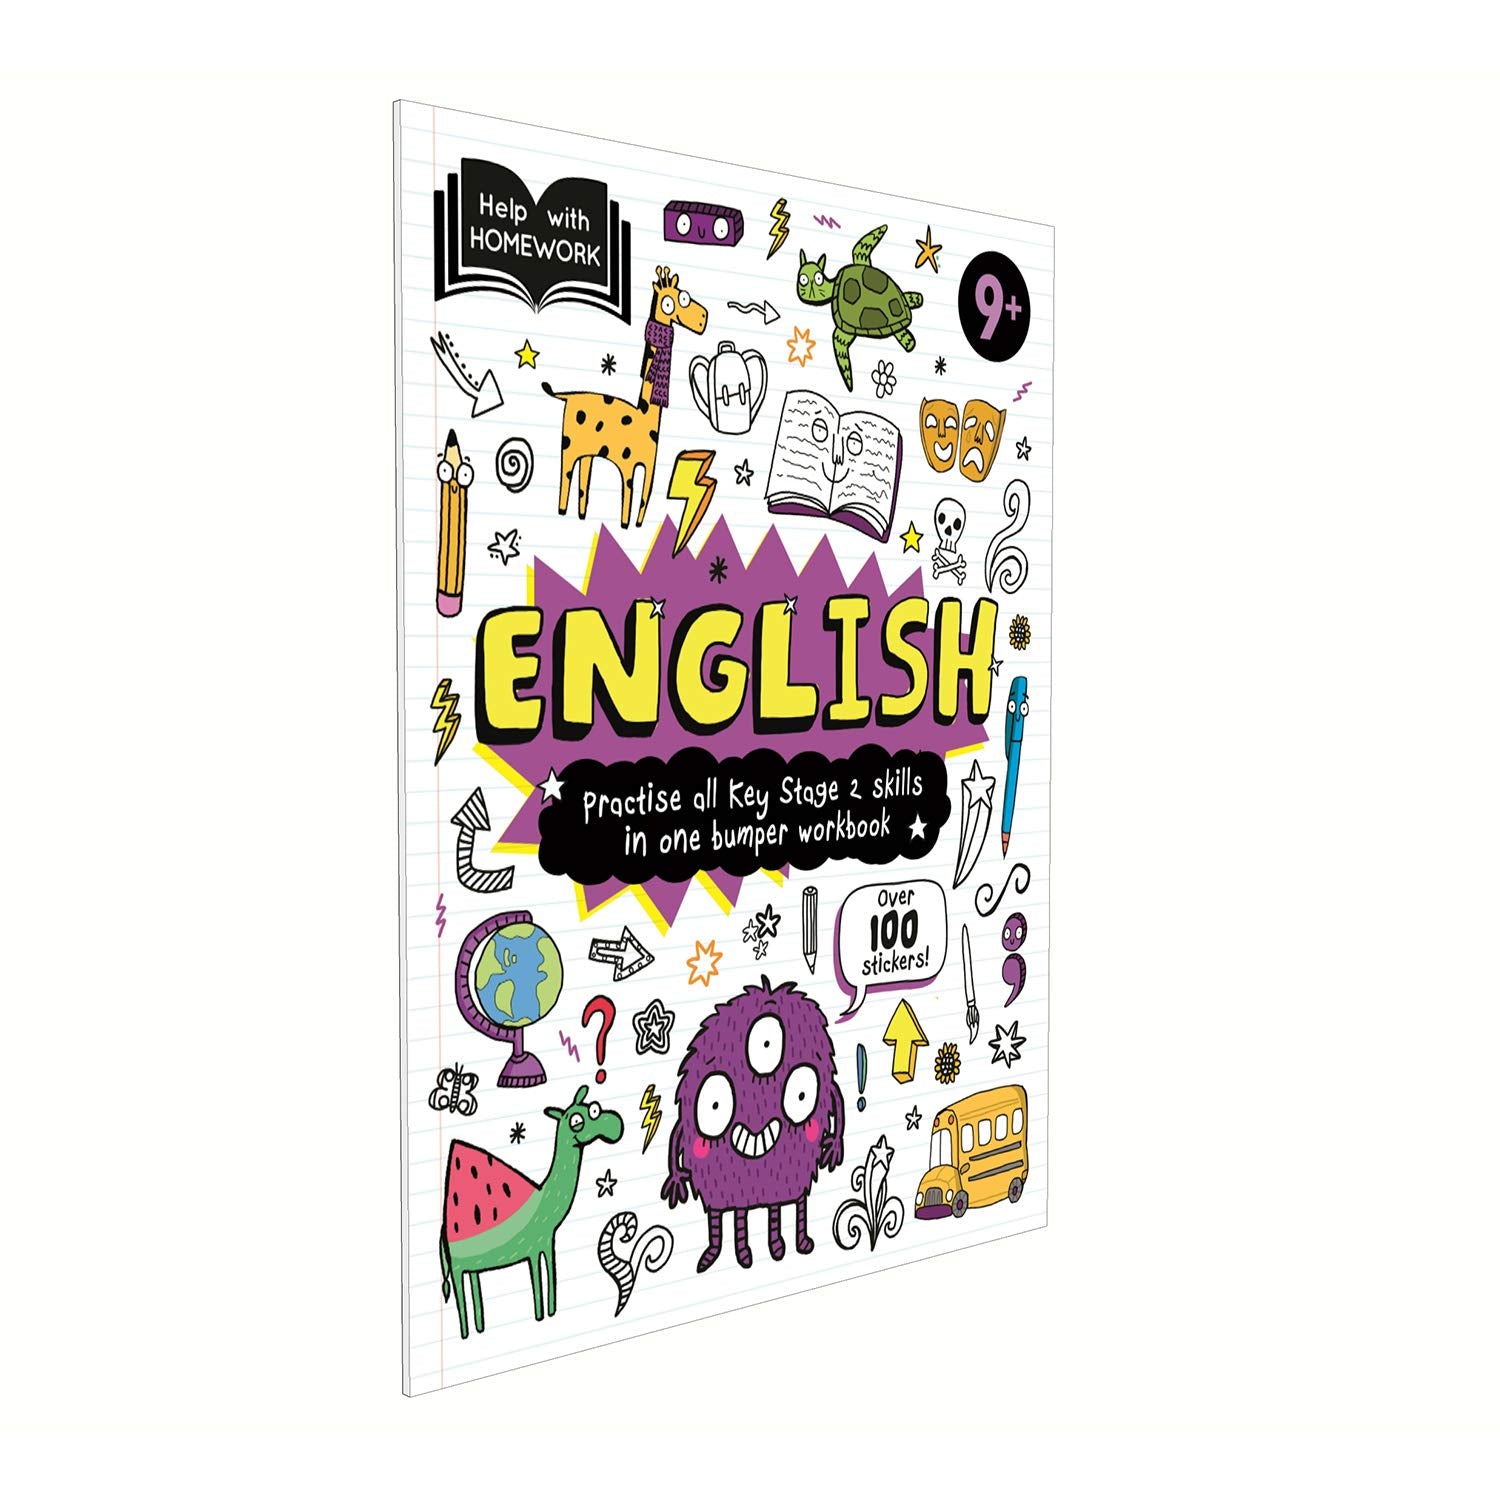 Help With Homework: 9+ English - The English Bookshop Kuwait